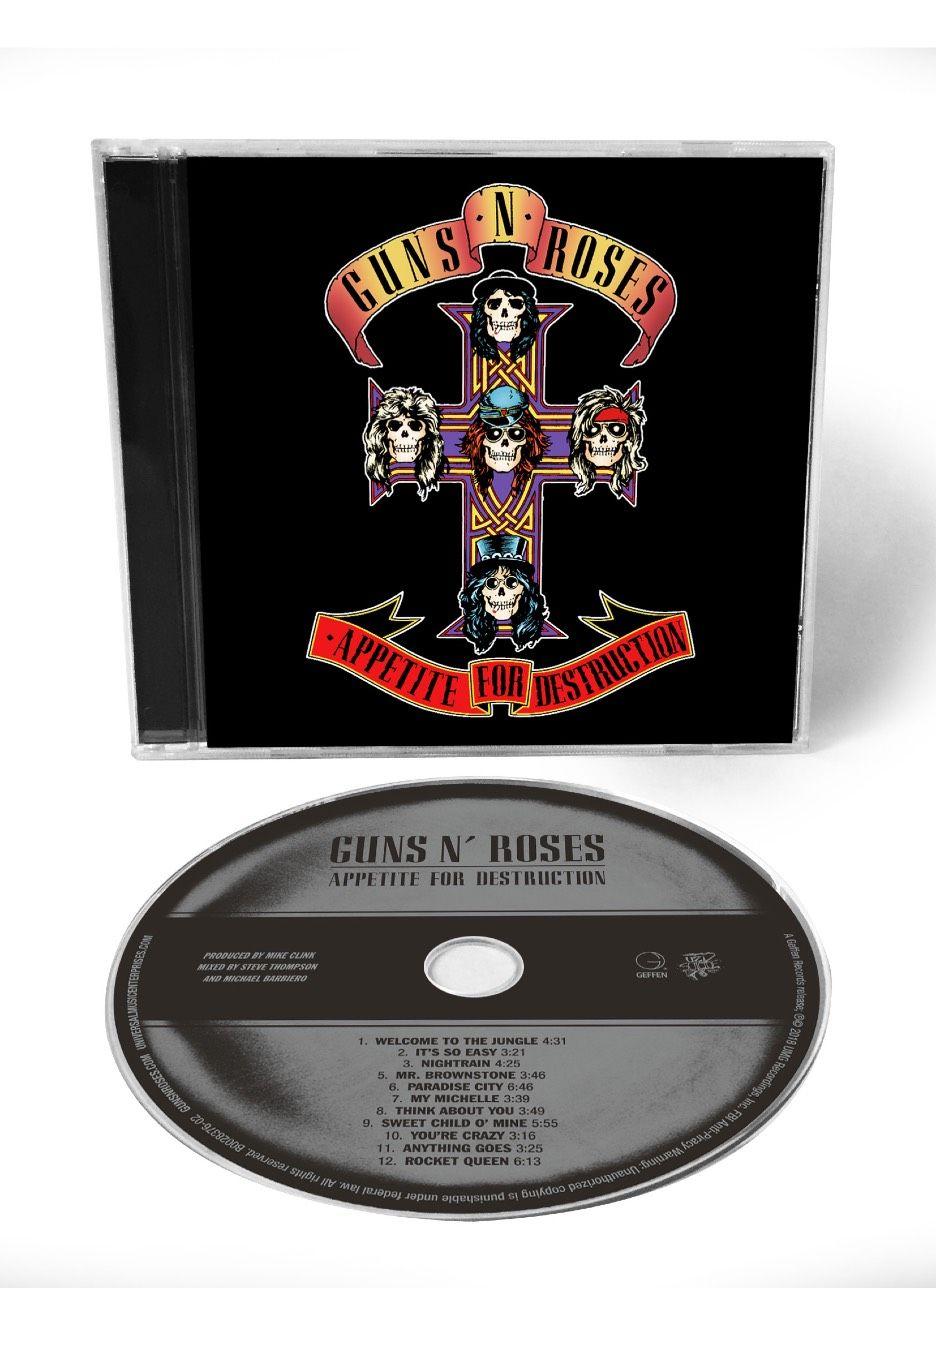 Guns and Roses Appetite for Destruction Logo - Guns N' Roses - Appetite For Destruction (Remastered) - CD - CDs ...